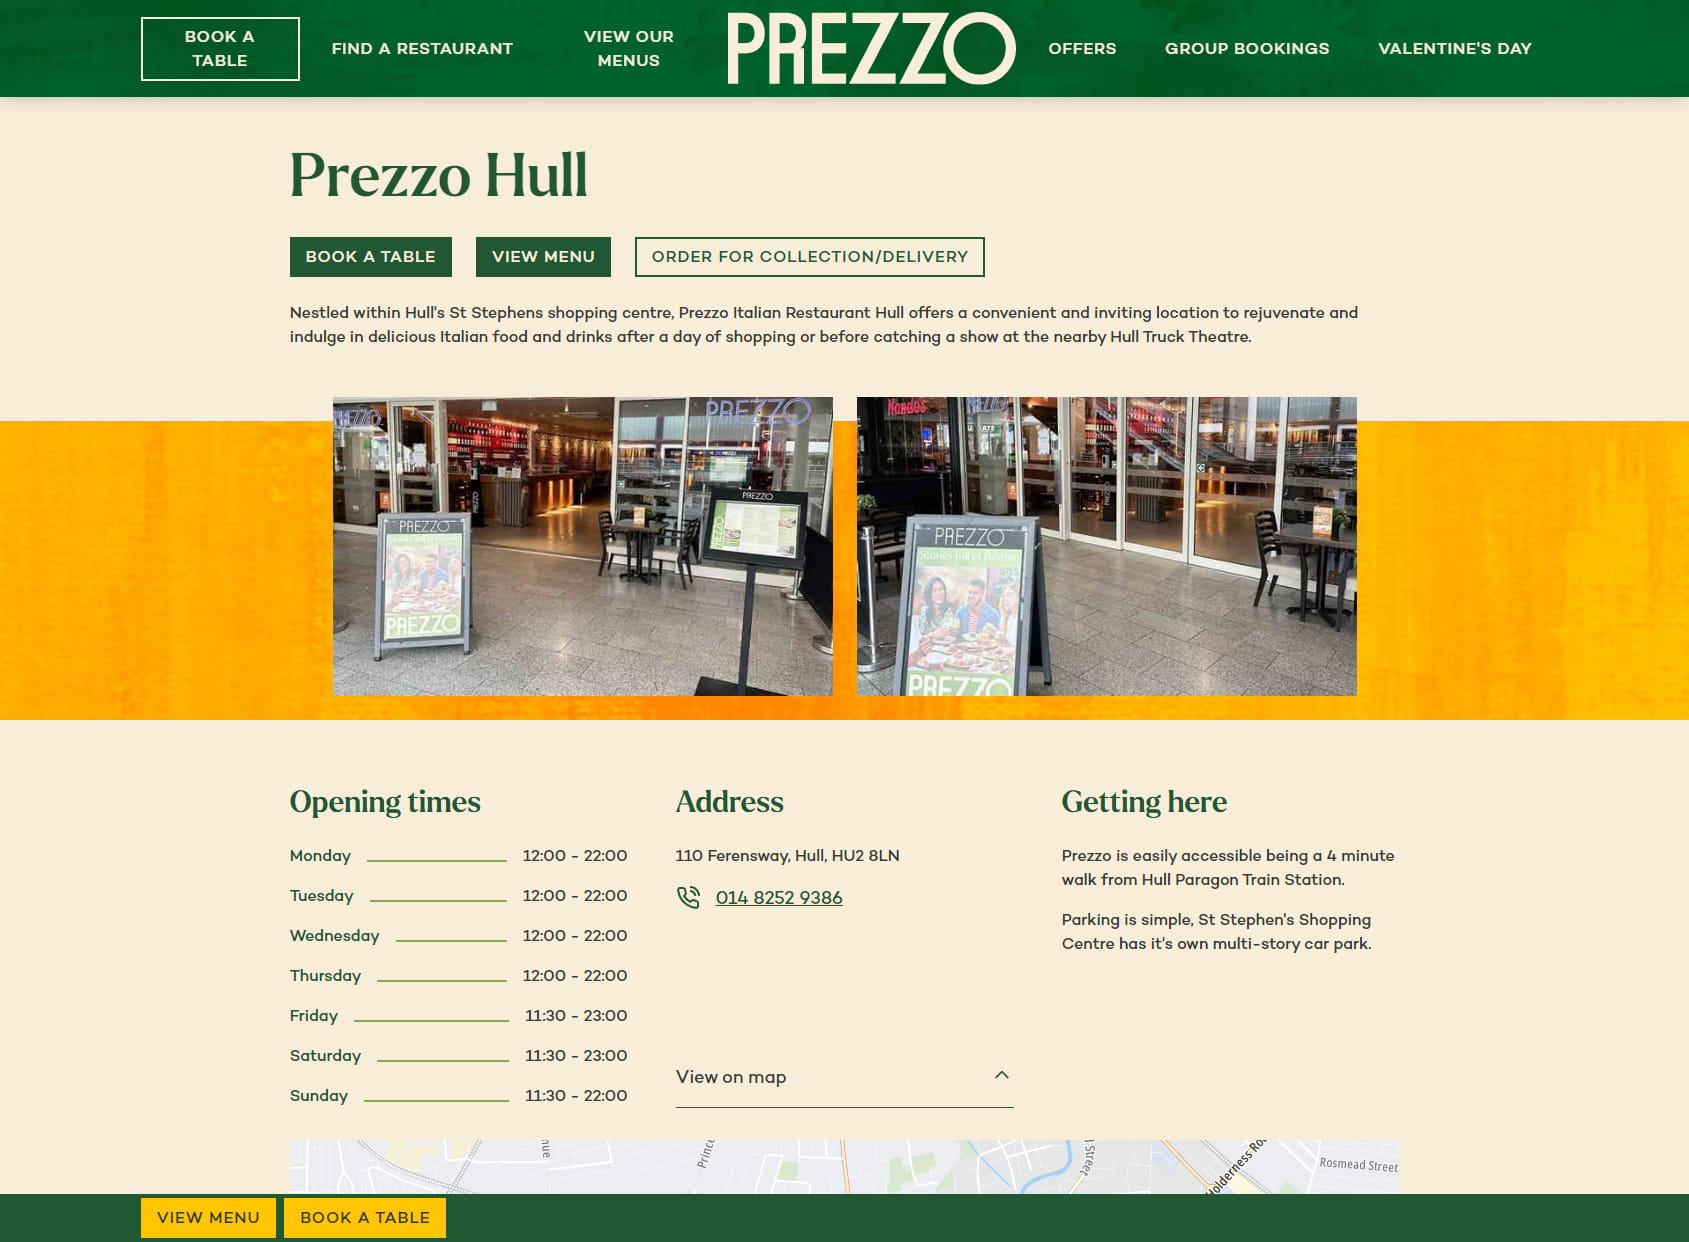 Prezzo Italian Restaurant Hull